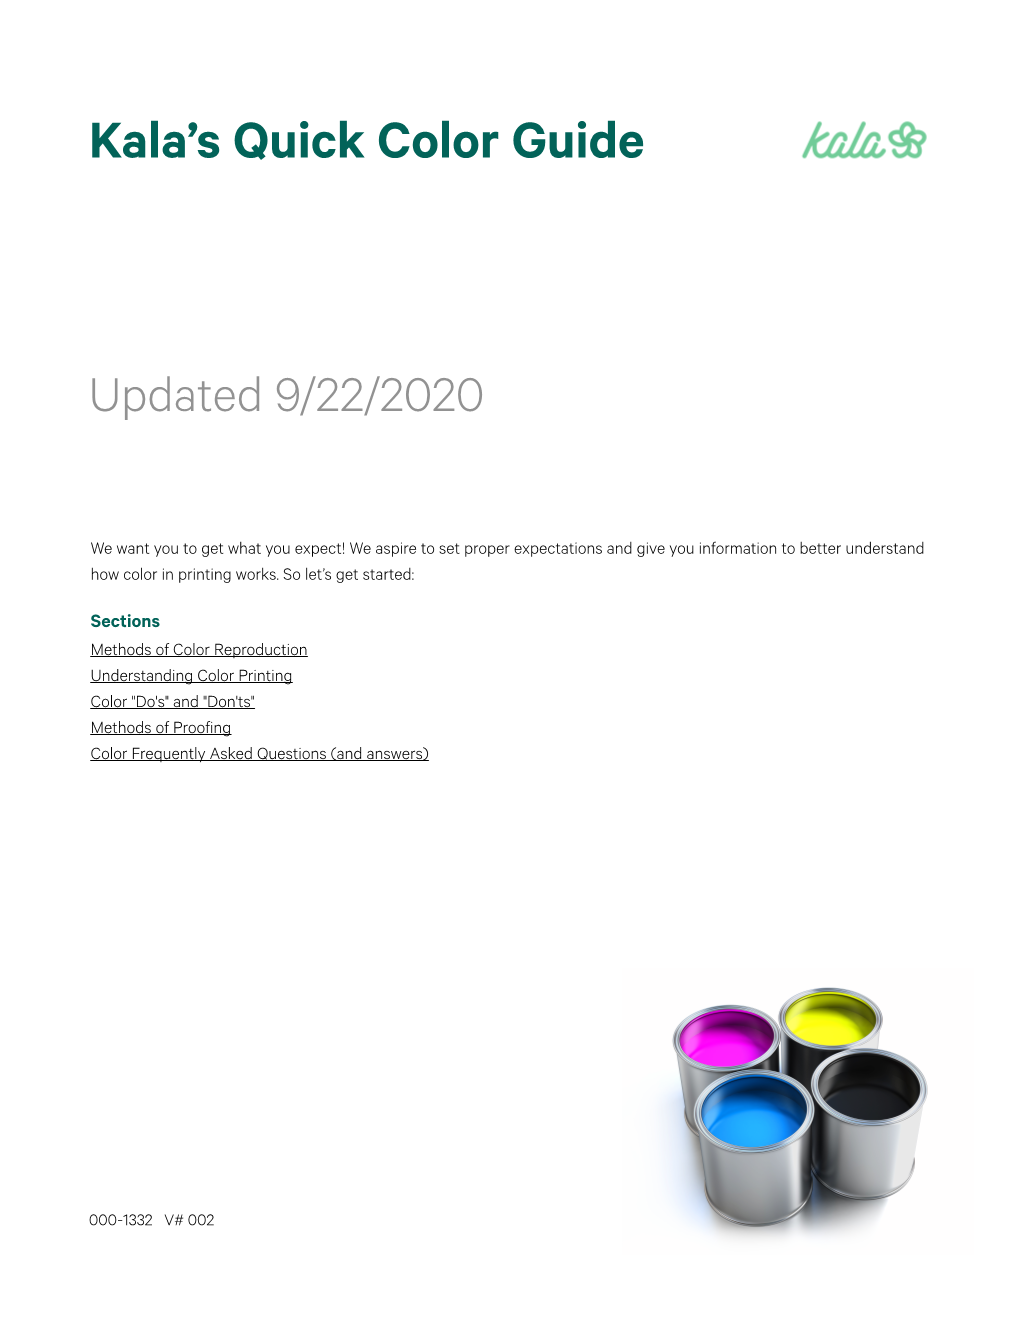 000-1332-TR- Kala Quick Color Guide